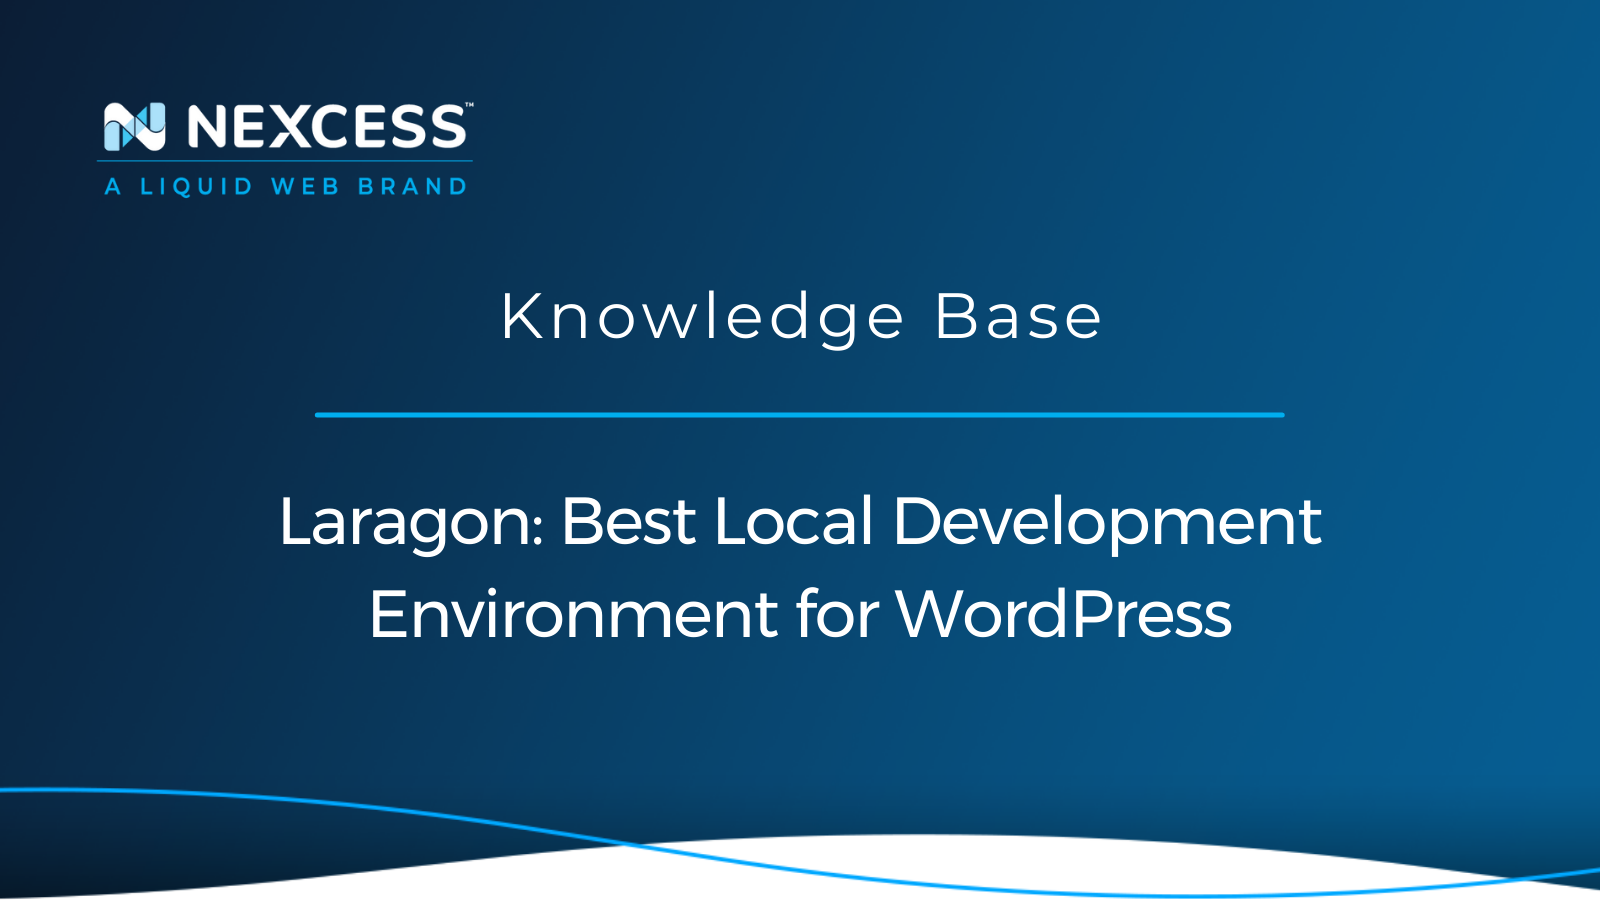 Laragon: Best Local Development Environment for WordPress